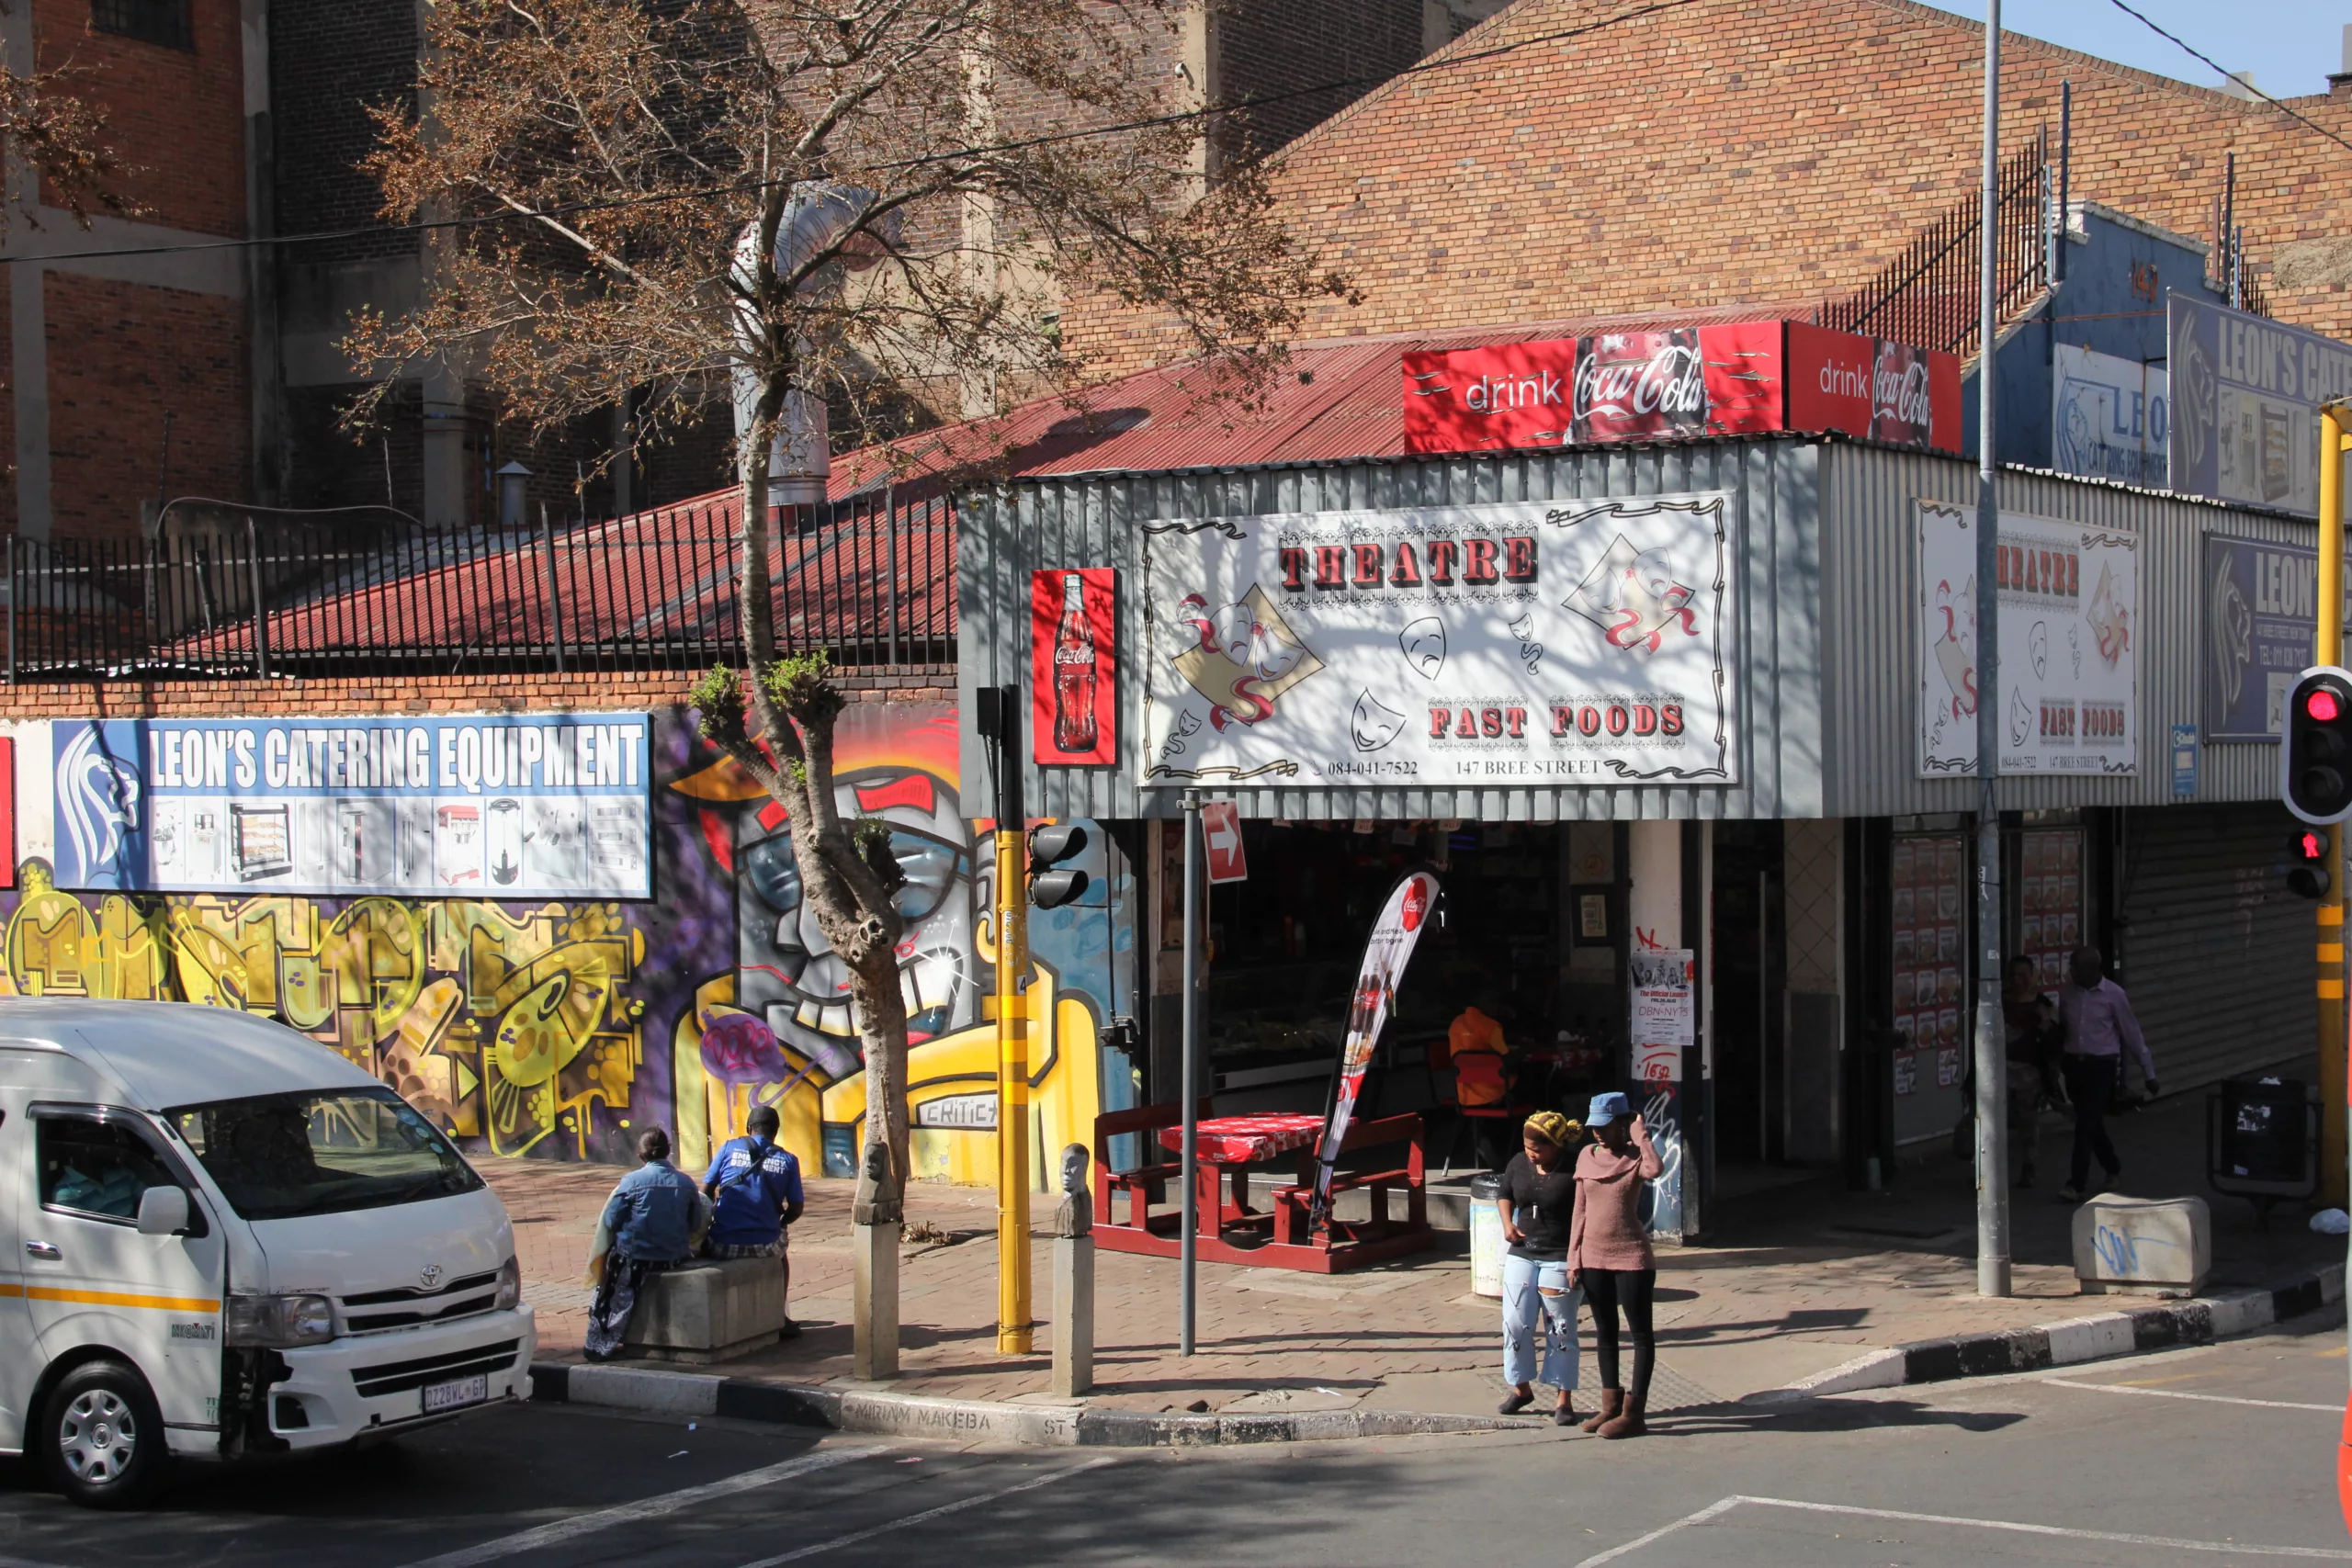 Tuc Shop in Johannesburg